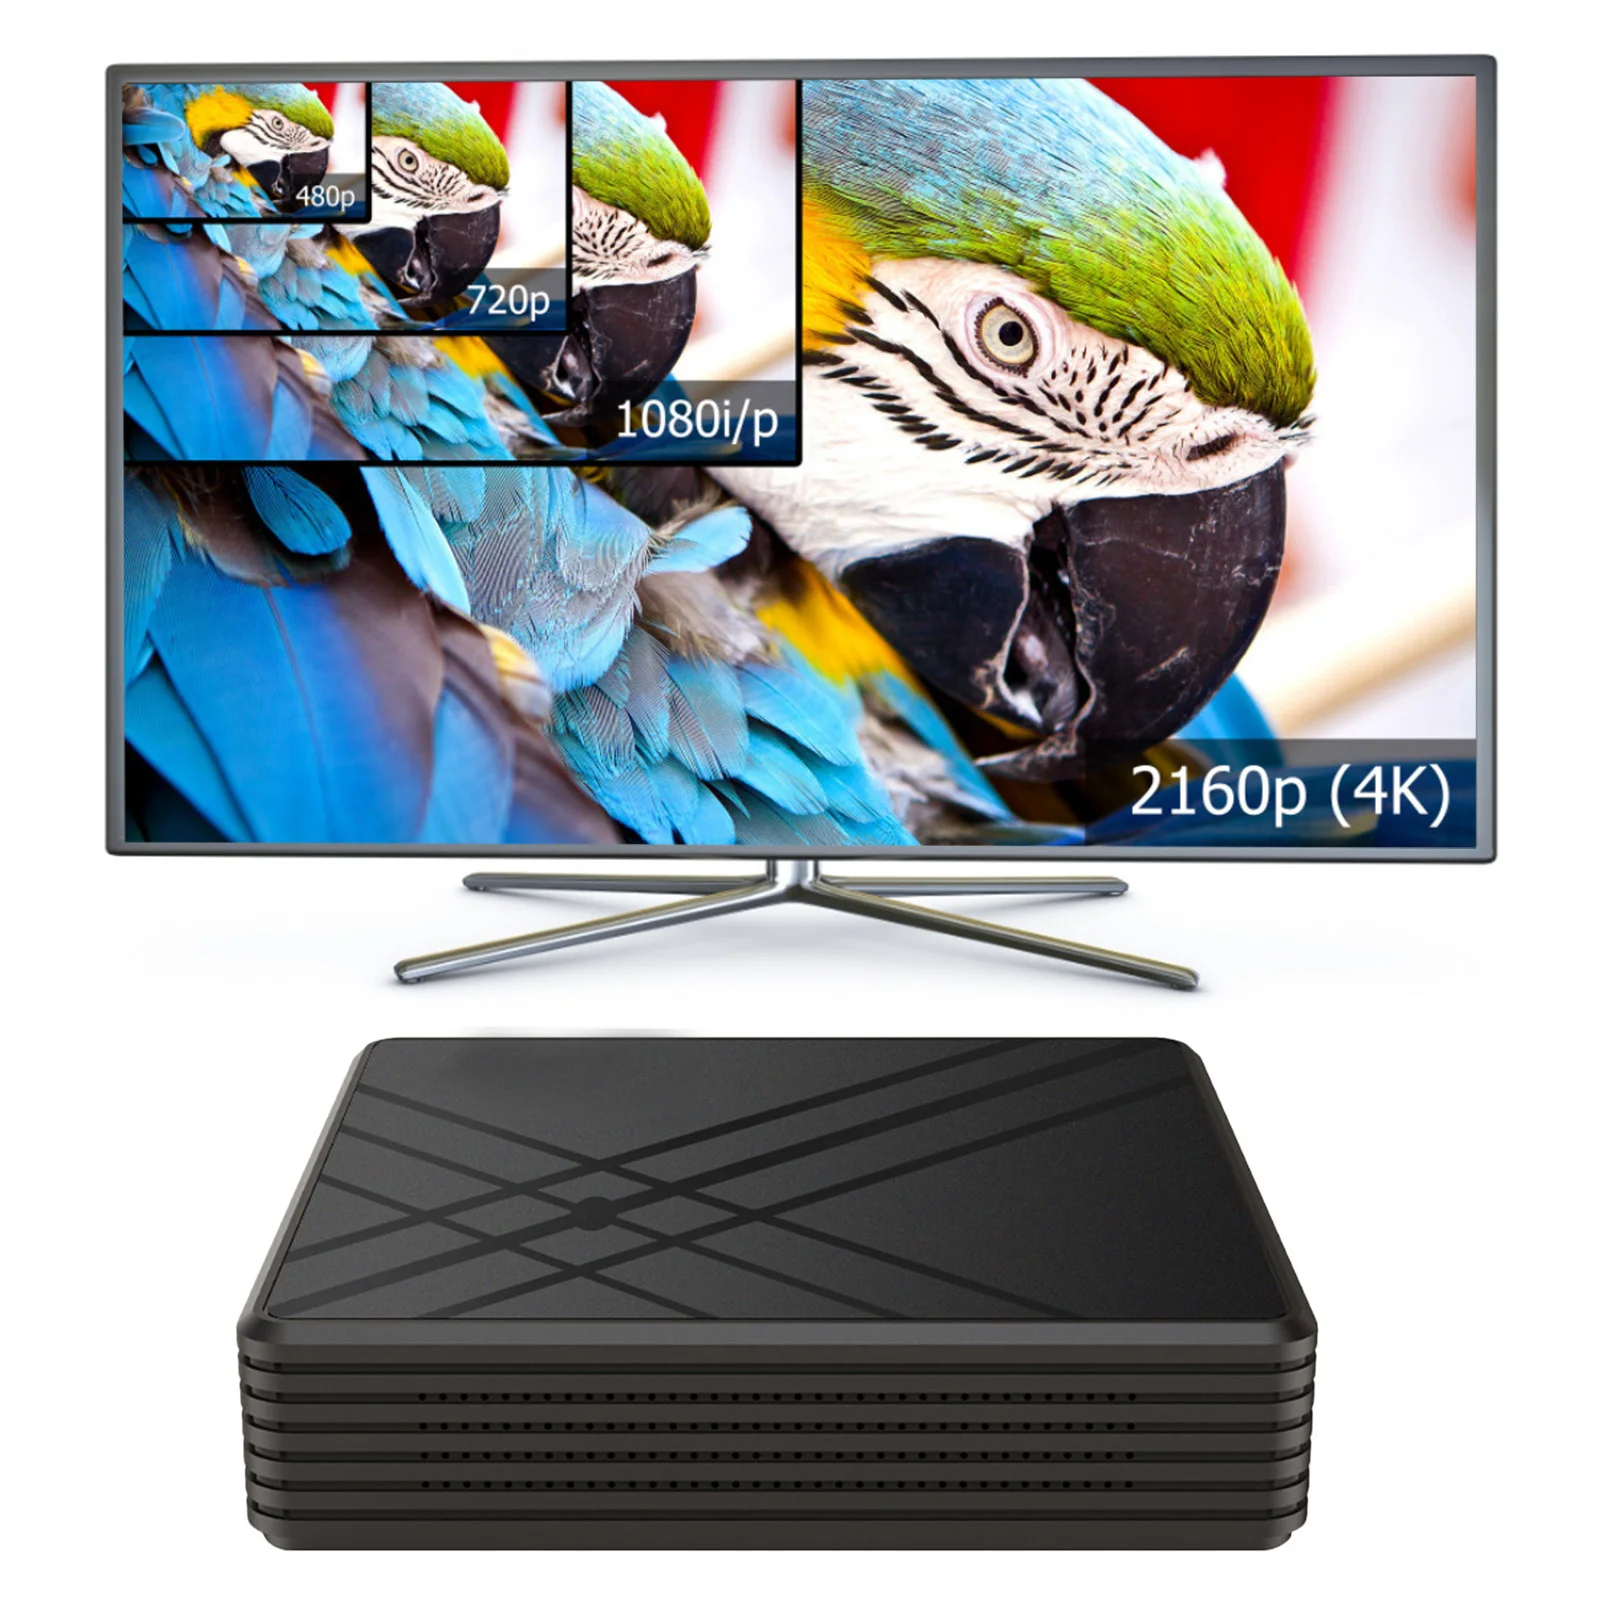 Android 9.0 TV Box 4 GB RAM, 32 GB ROM Smart TV Set Top Box, Streaming Media Player 